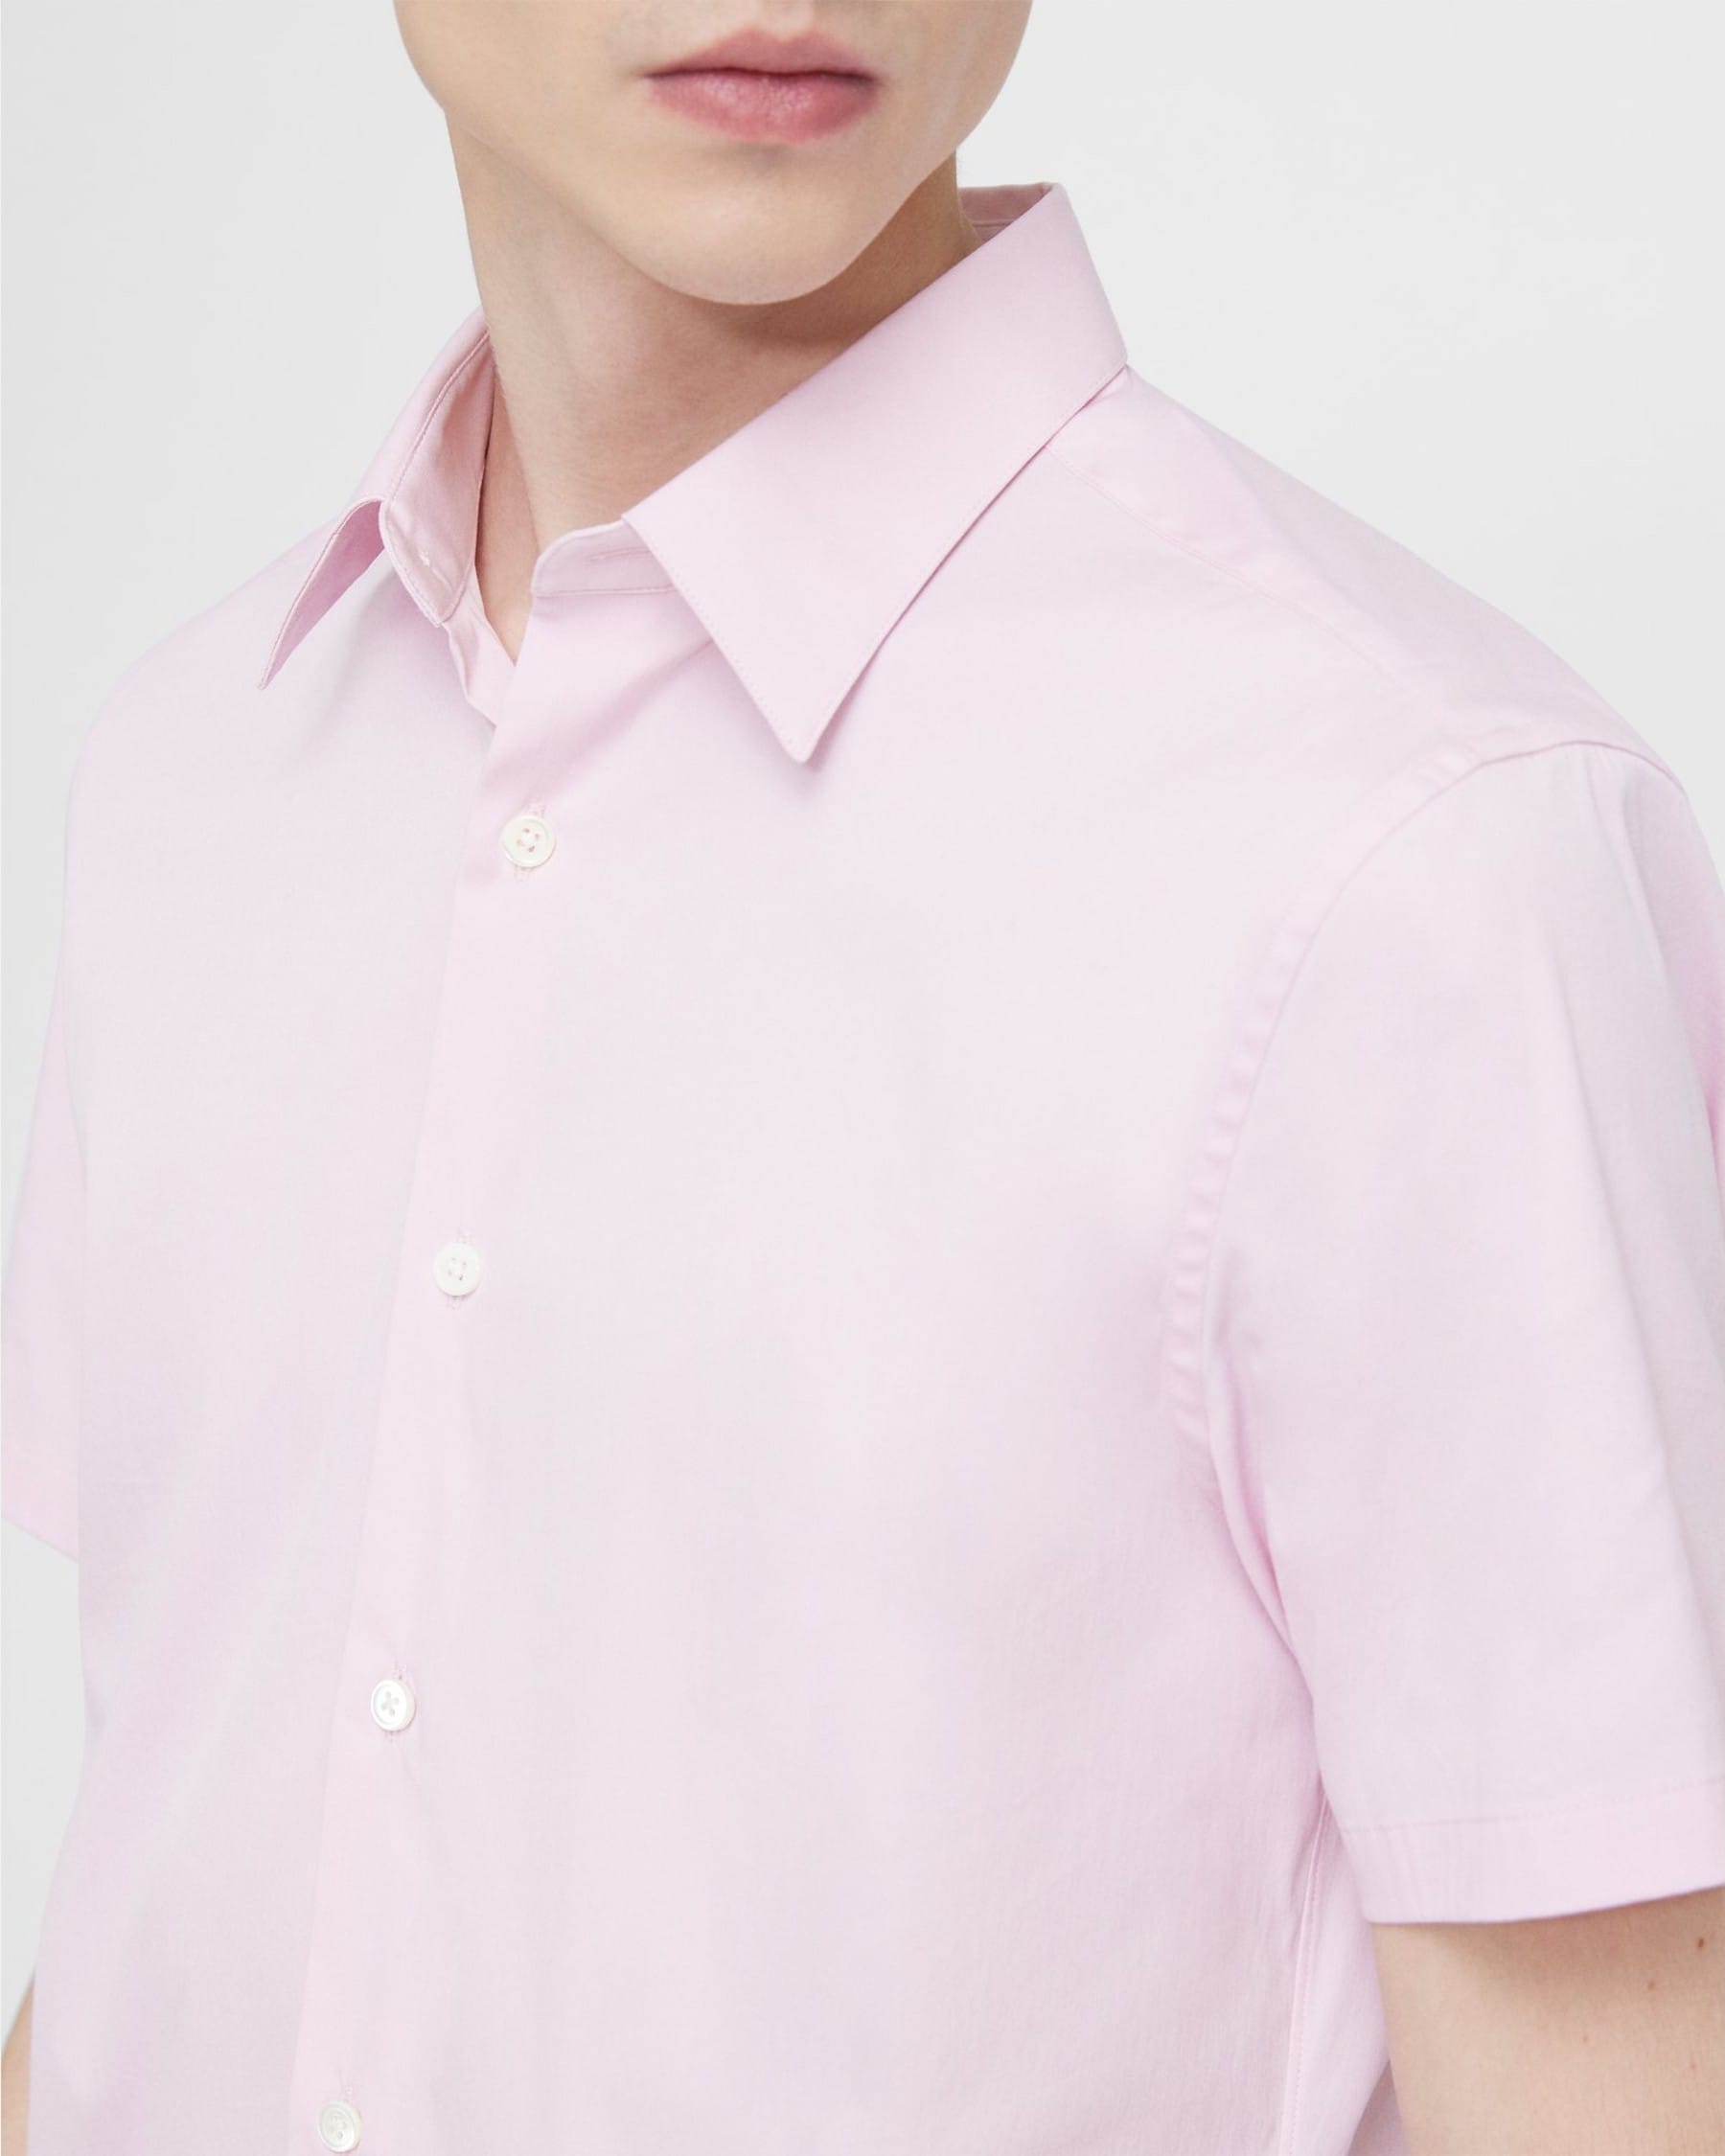 Sylvain Short-Sleeve Shirt in Good Cotton